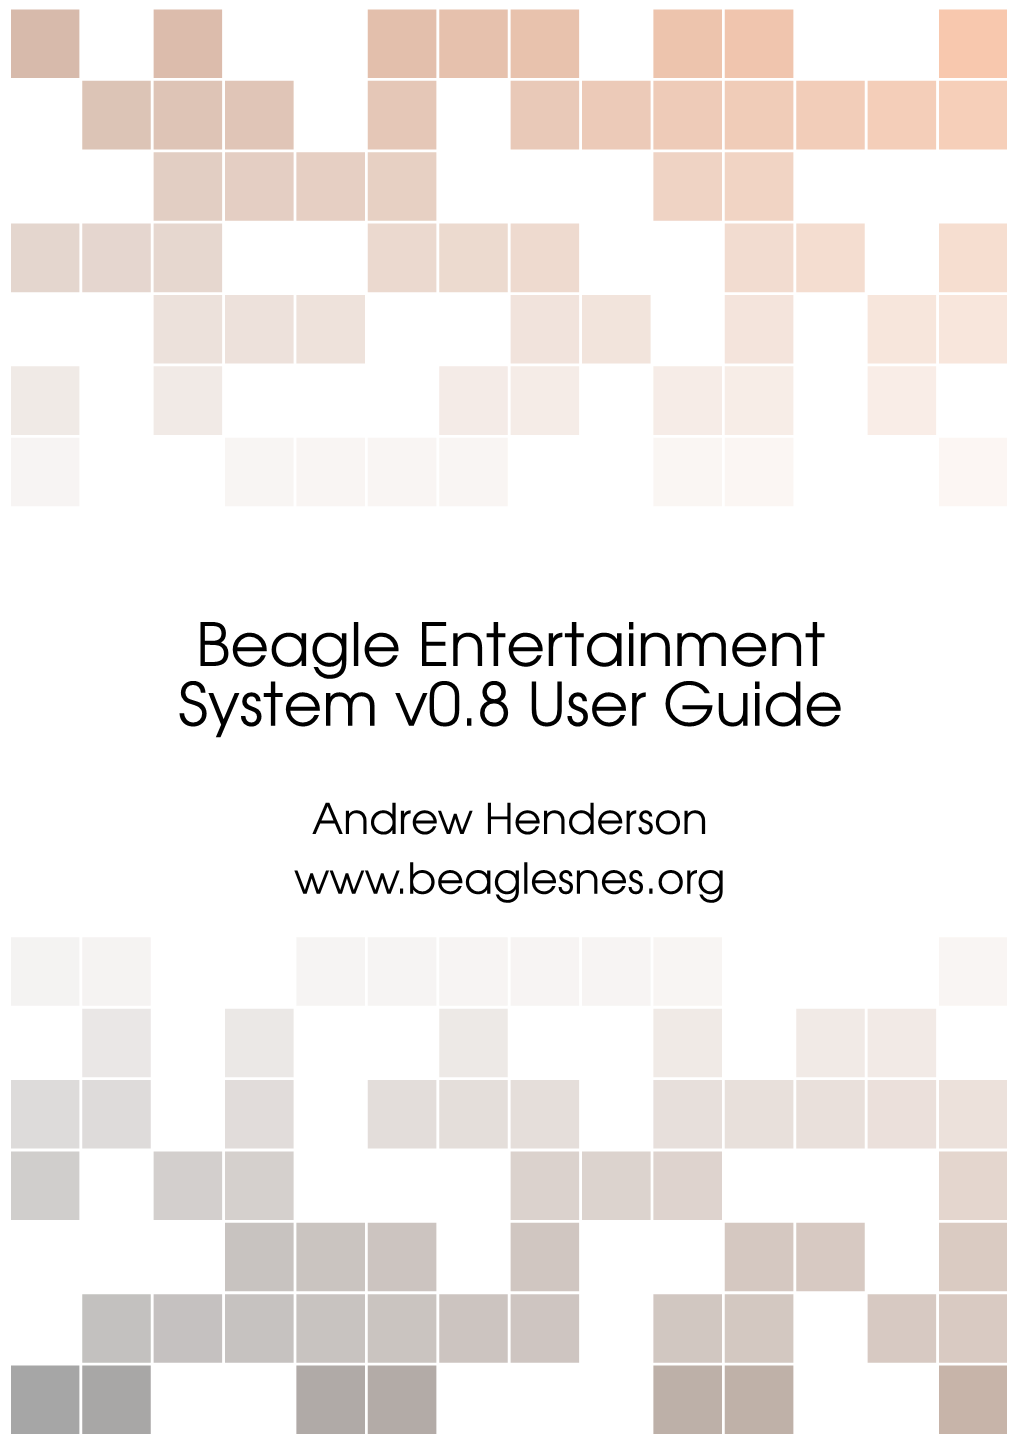 Beagle Entertainment System V0.8 User Guide